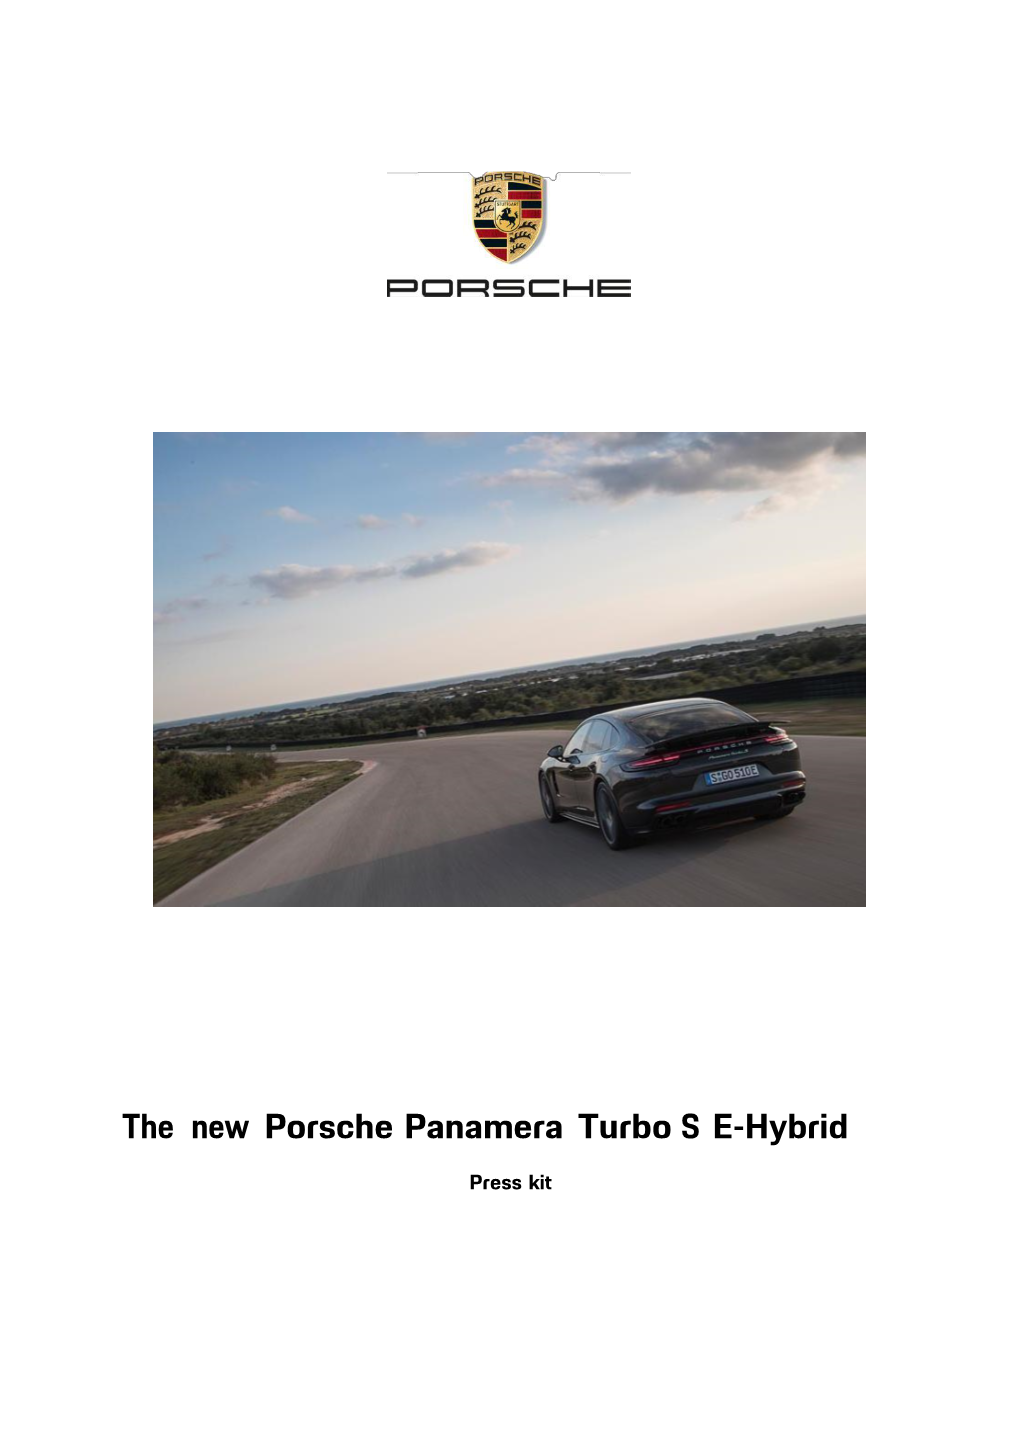 The New Porsche Panamera Turbo S E-Hybrid